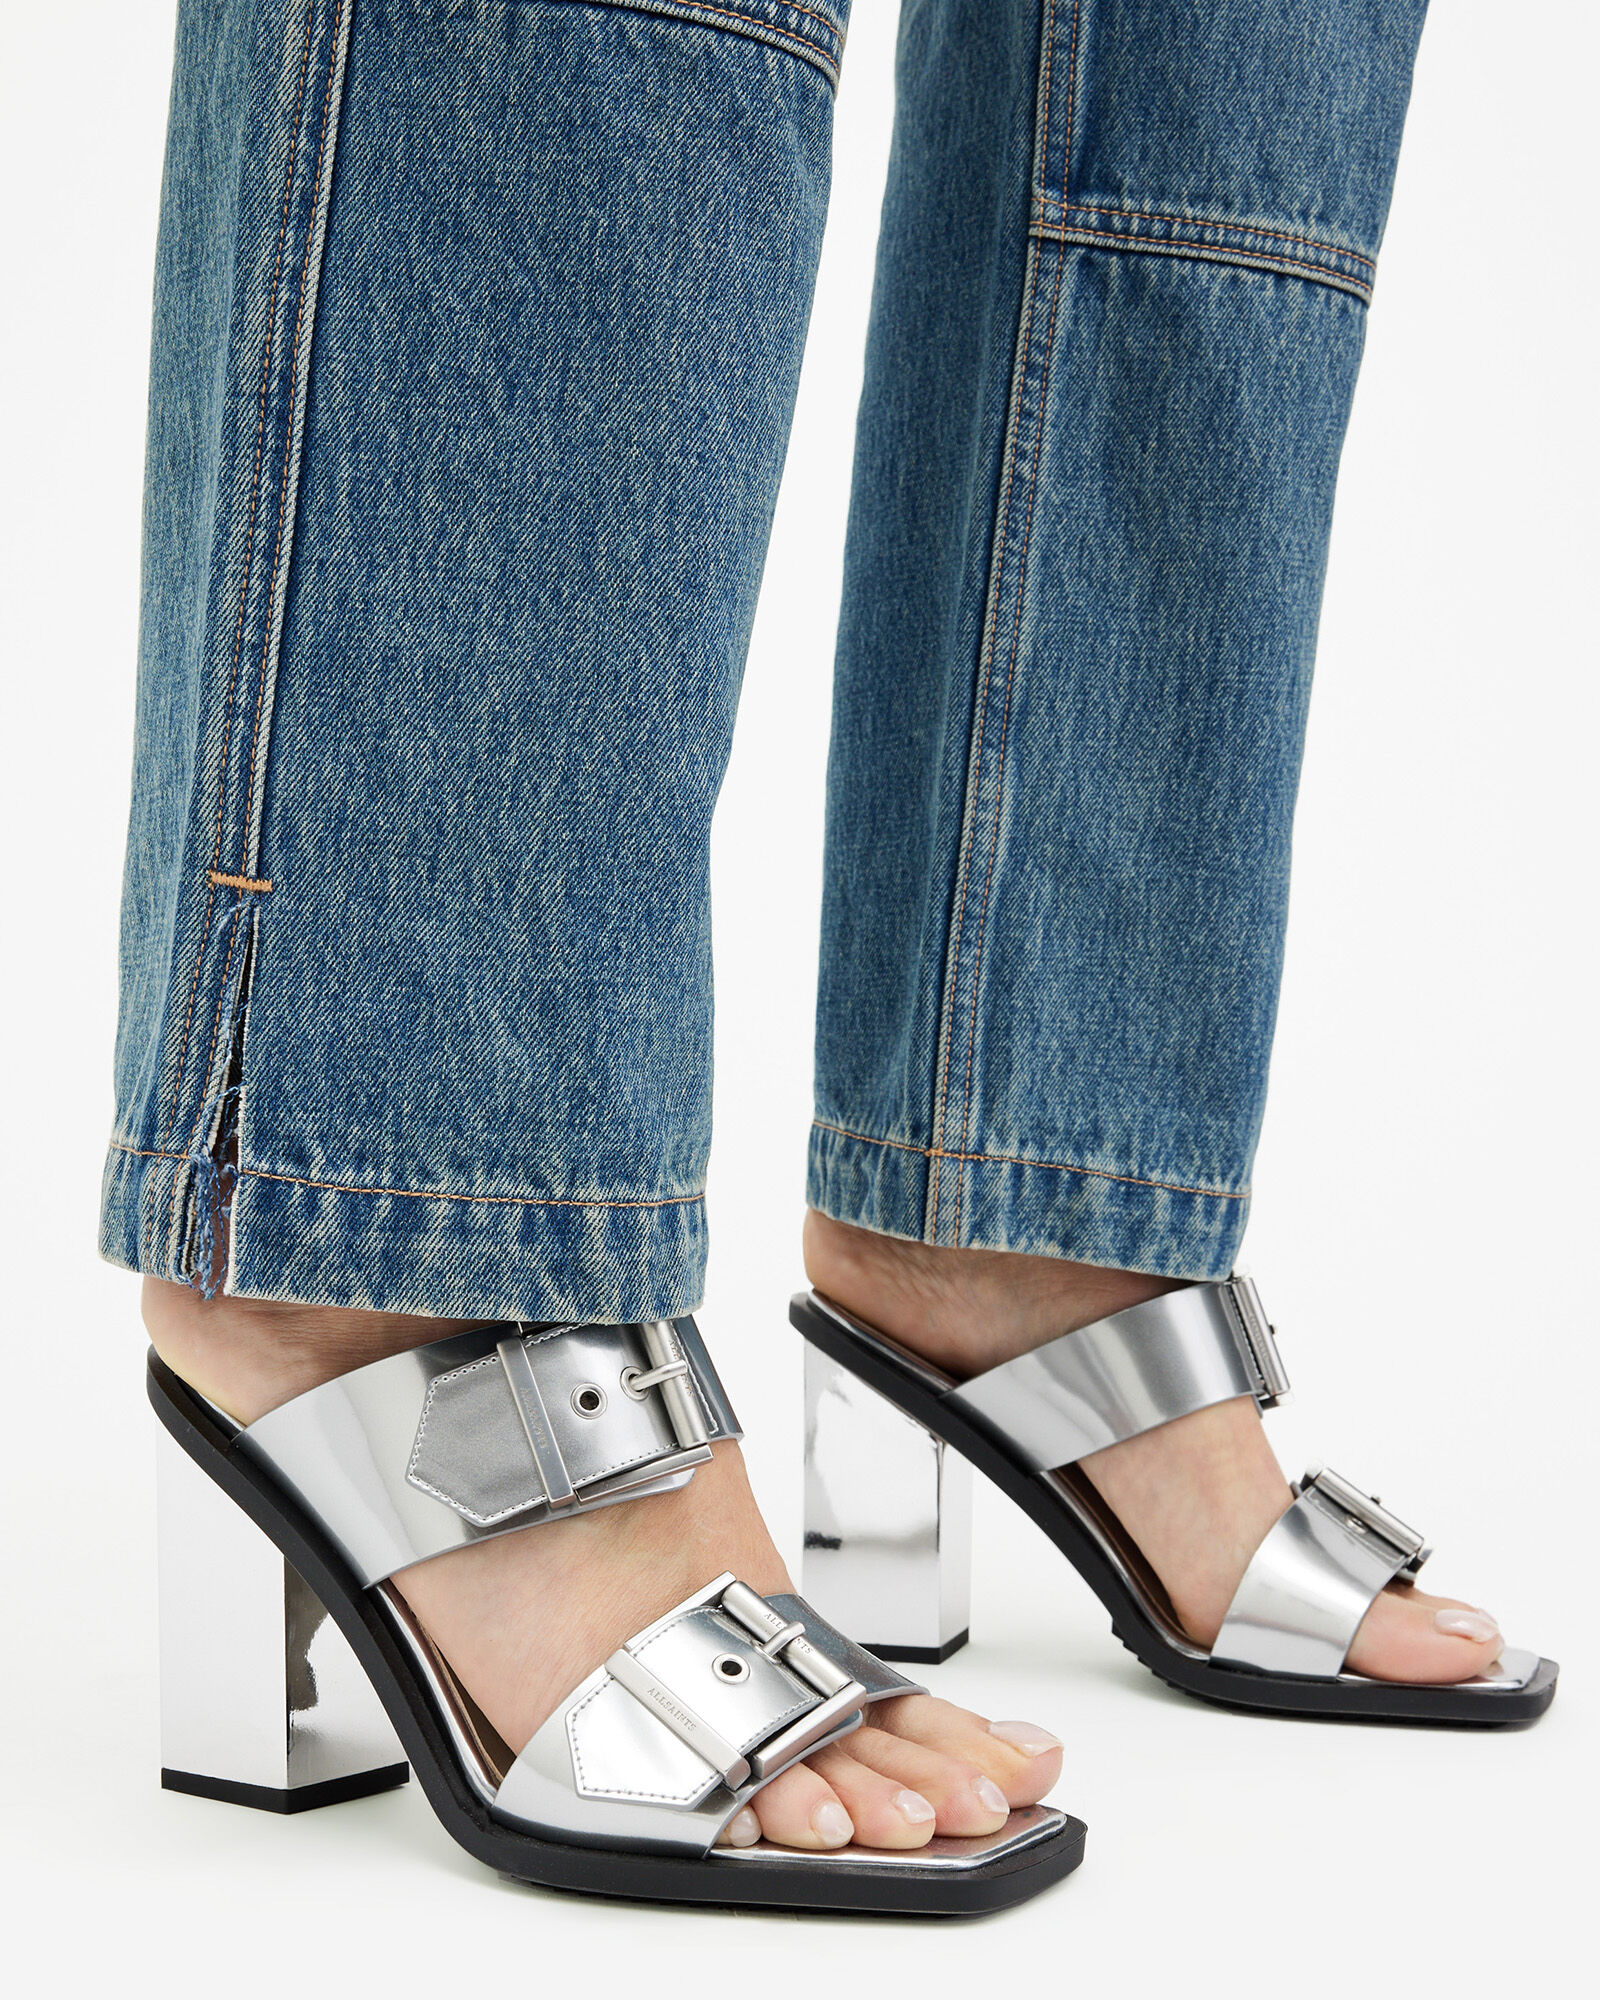 Camille Metallic Leather Block Heels